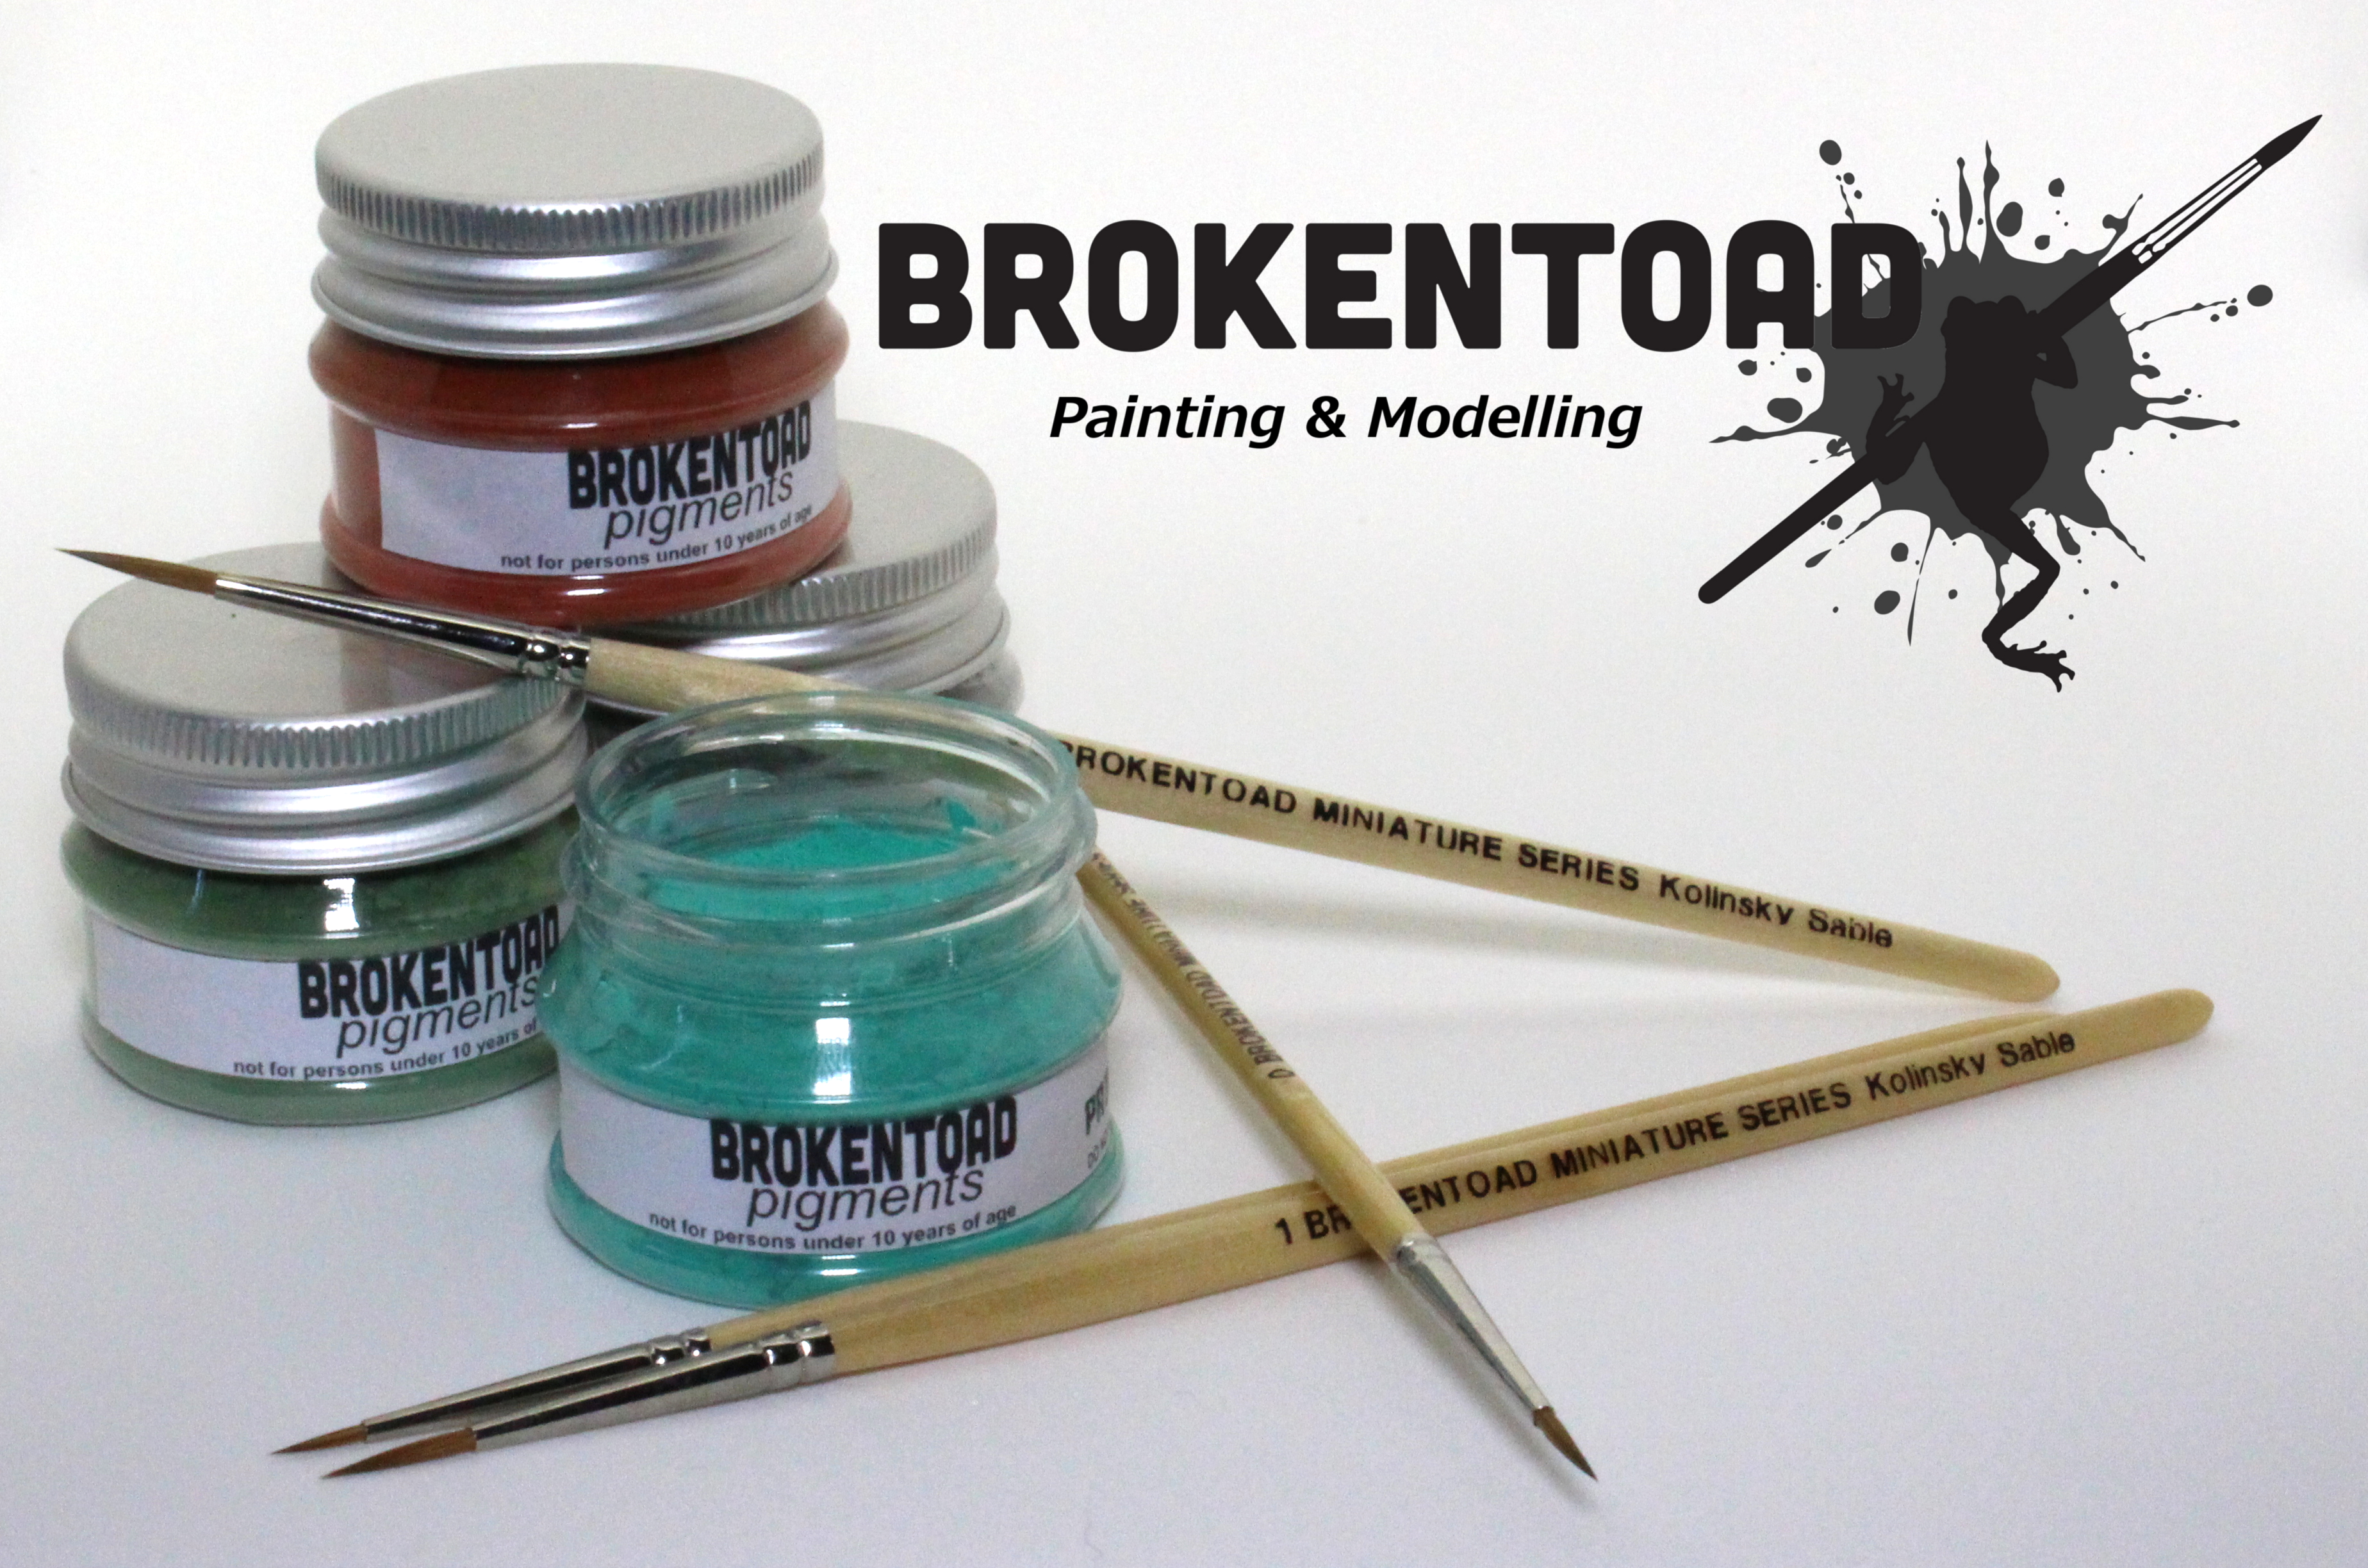 BrokenToad – New on the market